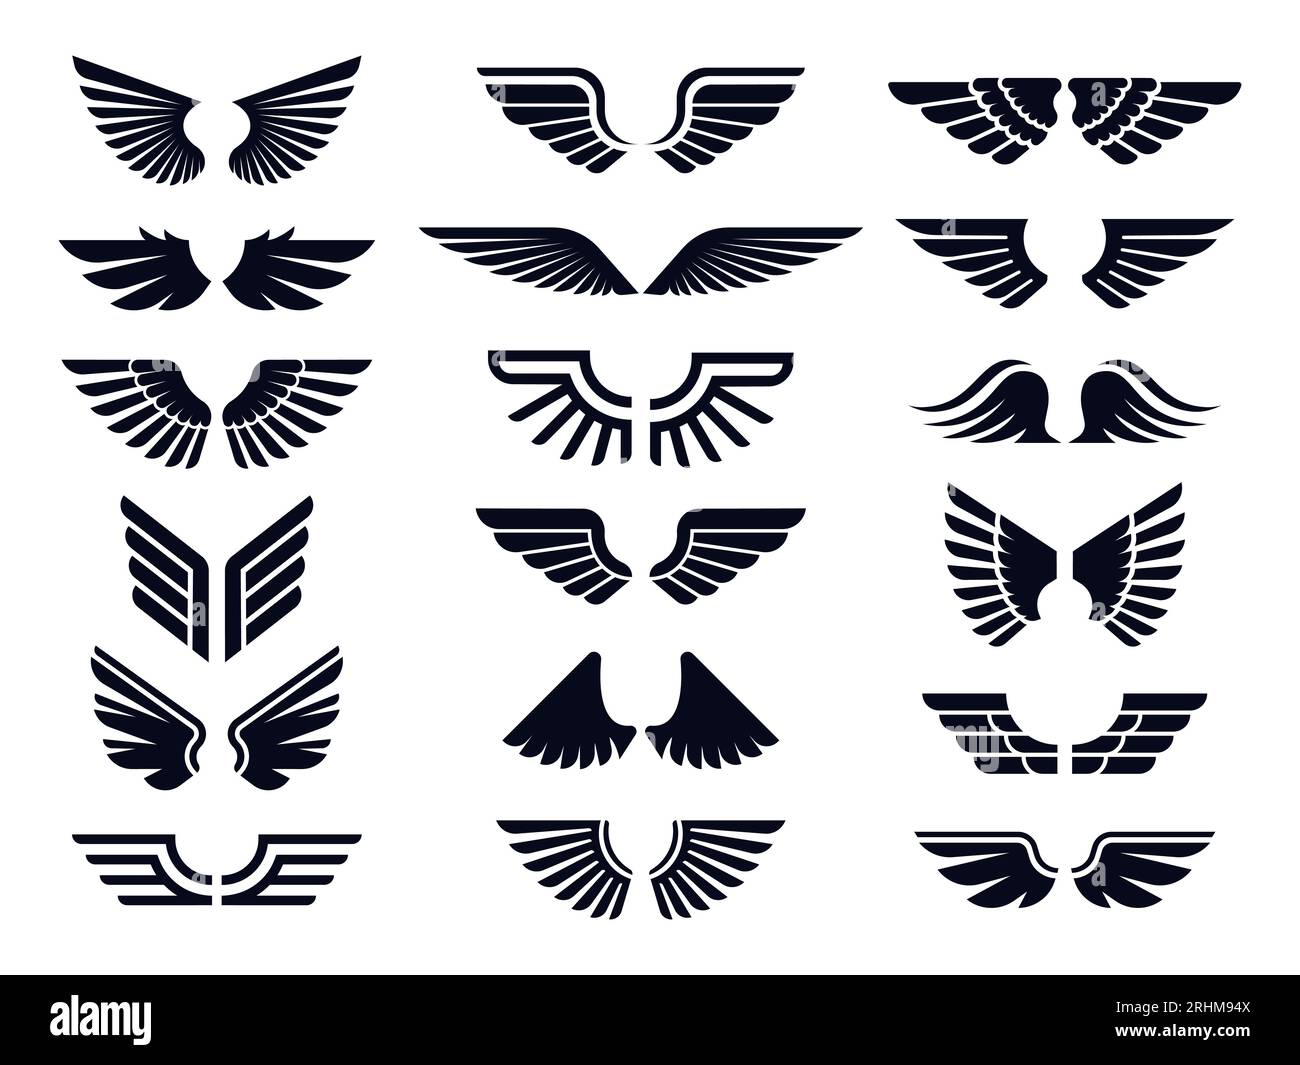 Devil Wings Tattoo Demon Isolated Stencil स्टॉक वेक्टर (रॉयल्टी फ़्री)  2111806178 | Shutterstock